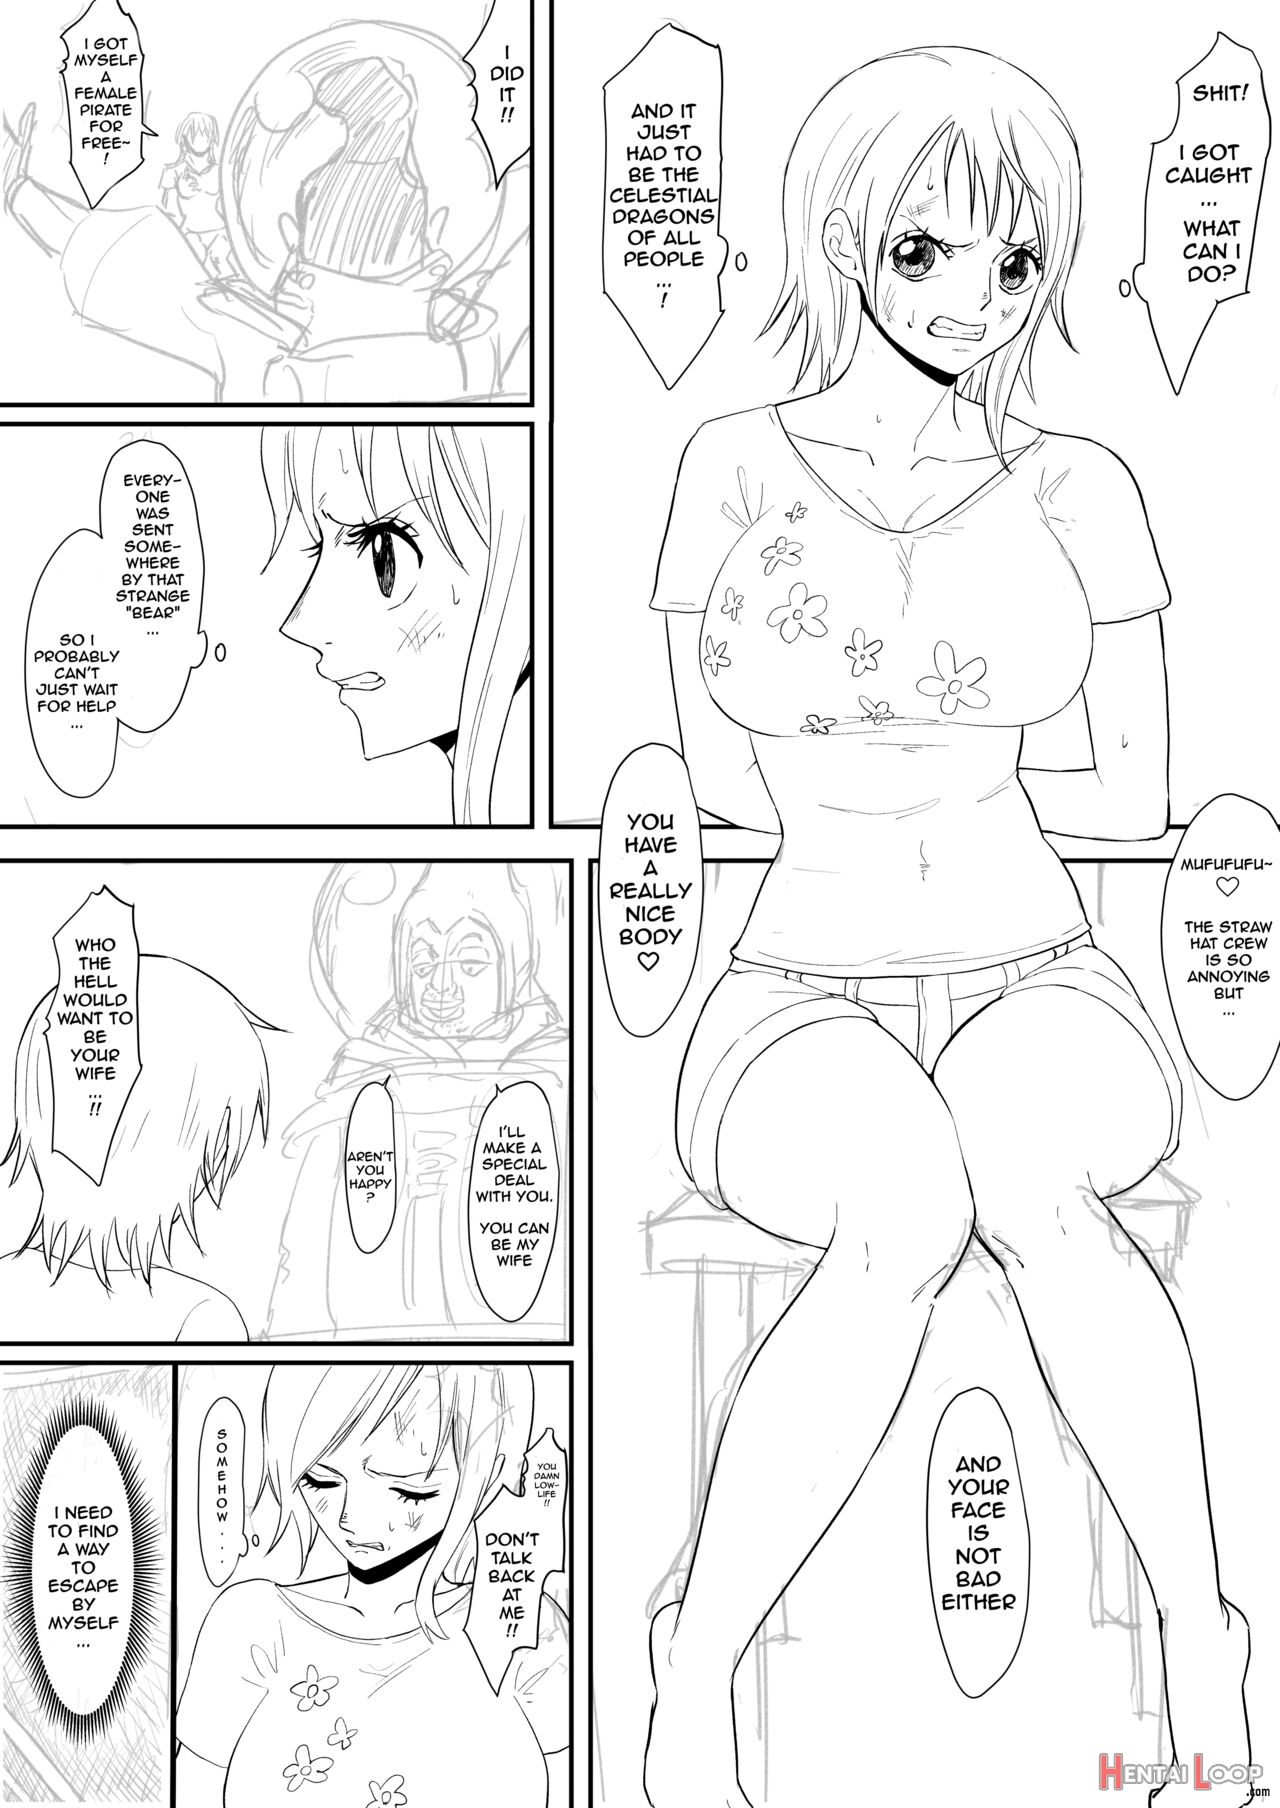 Nami Manga Translated page 1